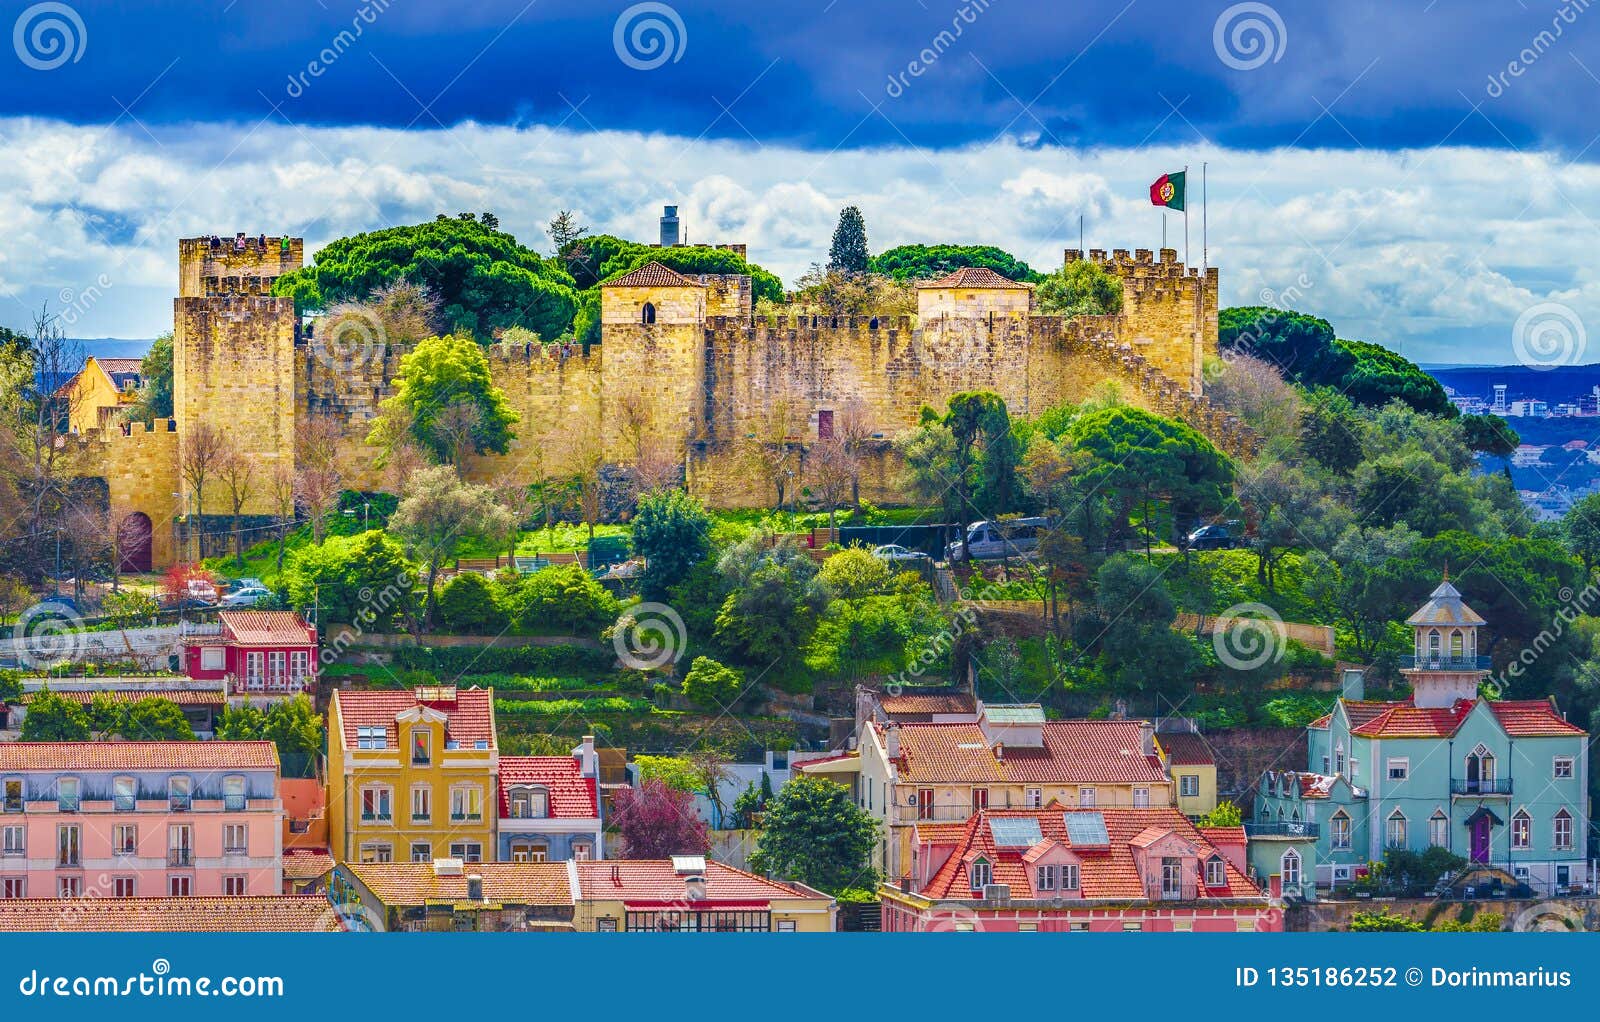 sao jorge castle in lisbon, portugal